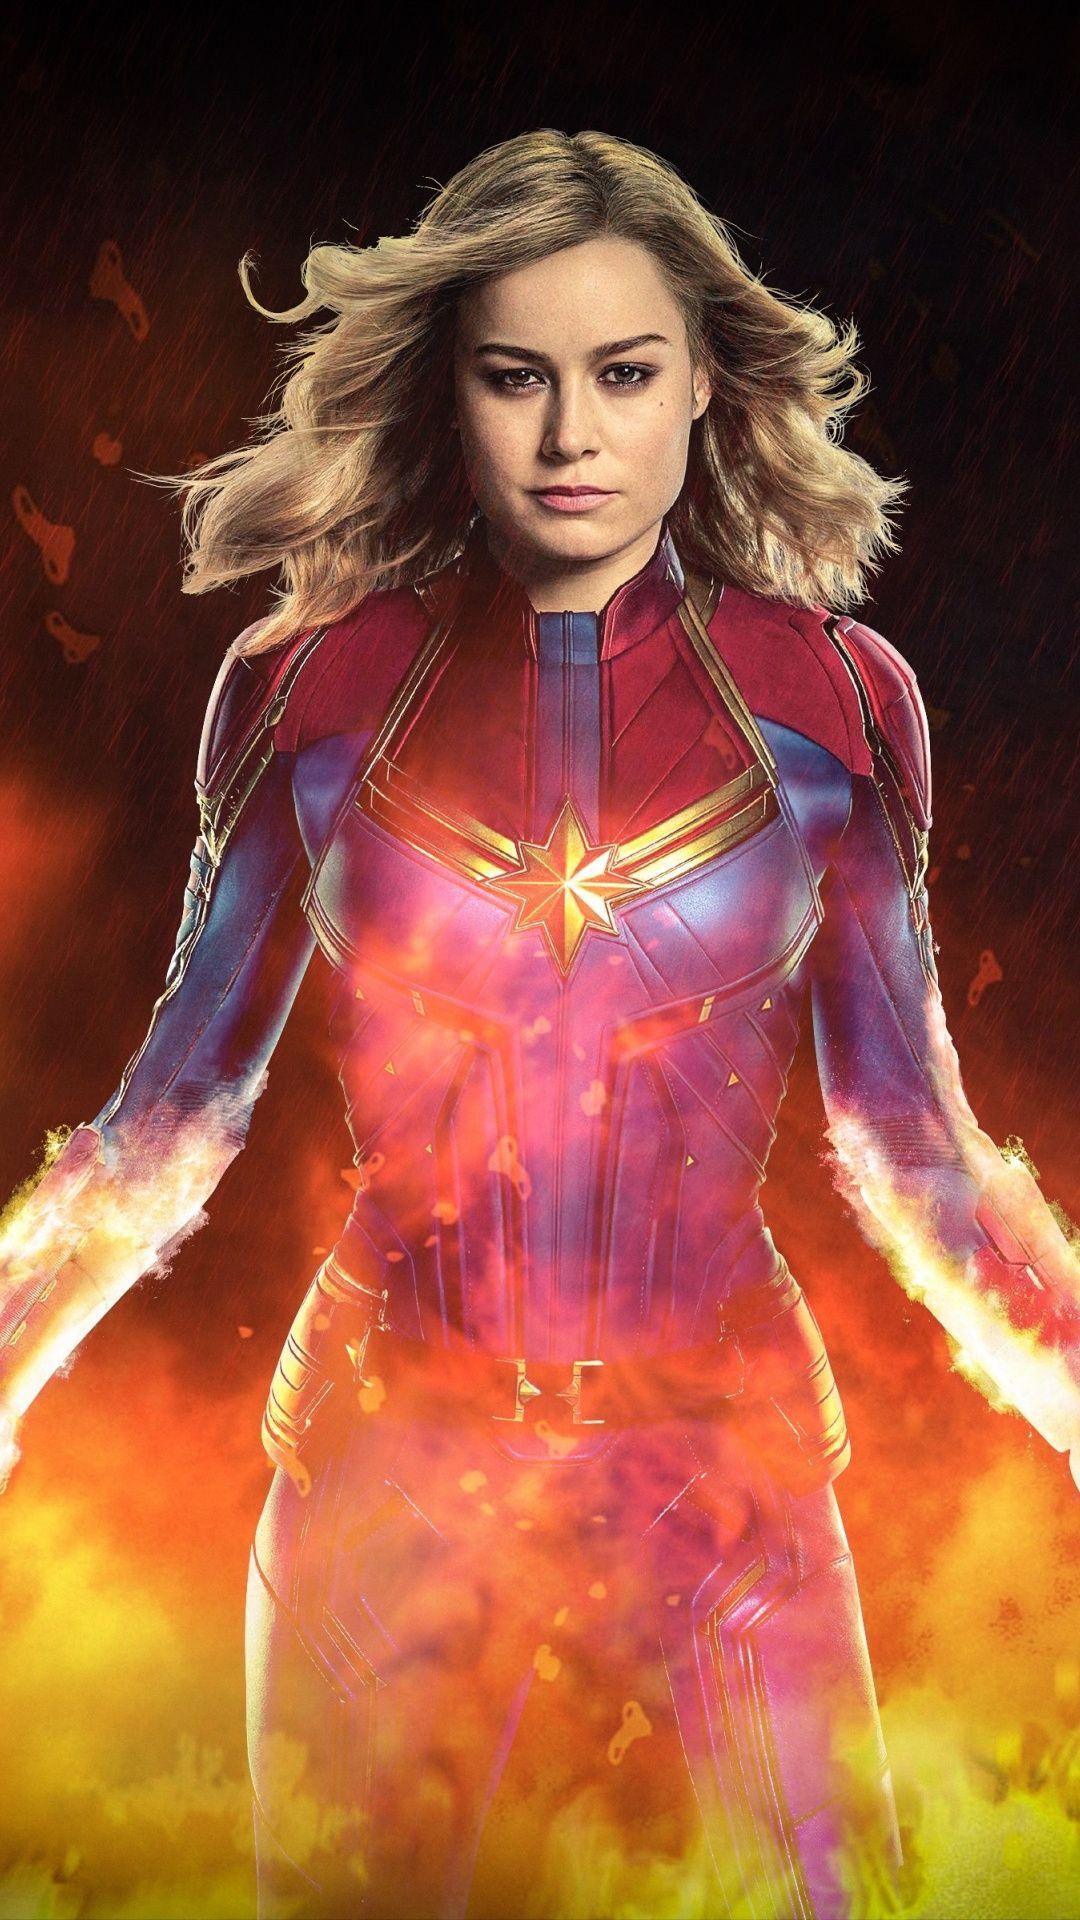 Fan art, Brie Larson, superhero, Captain Marvel, movie